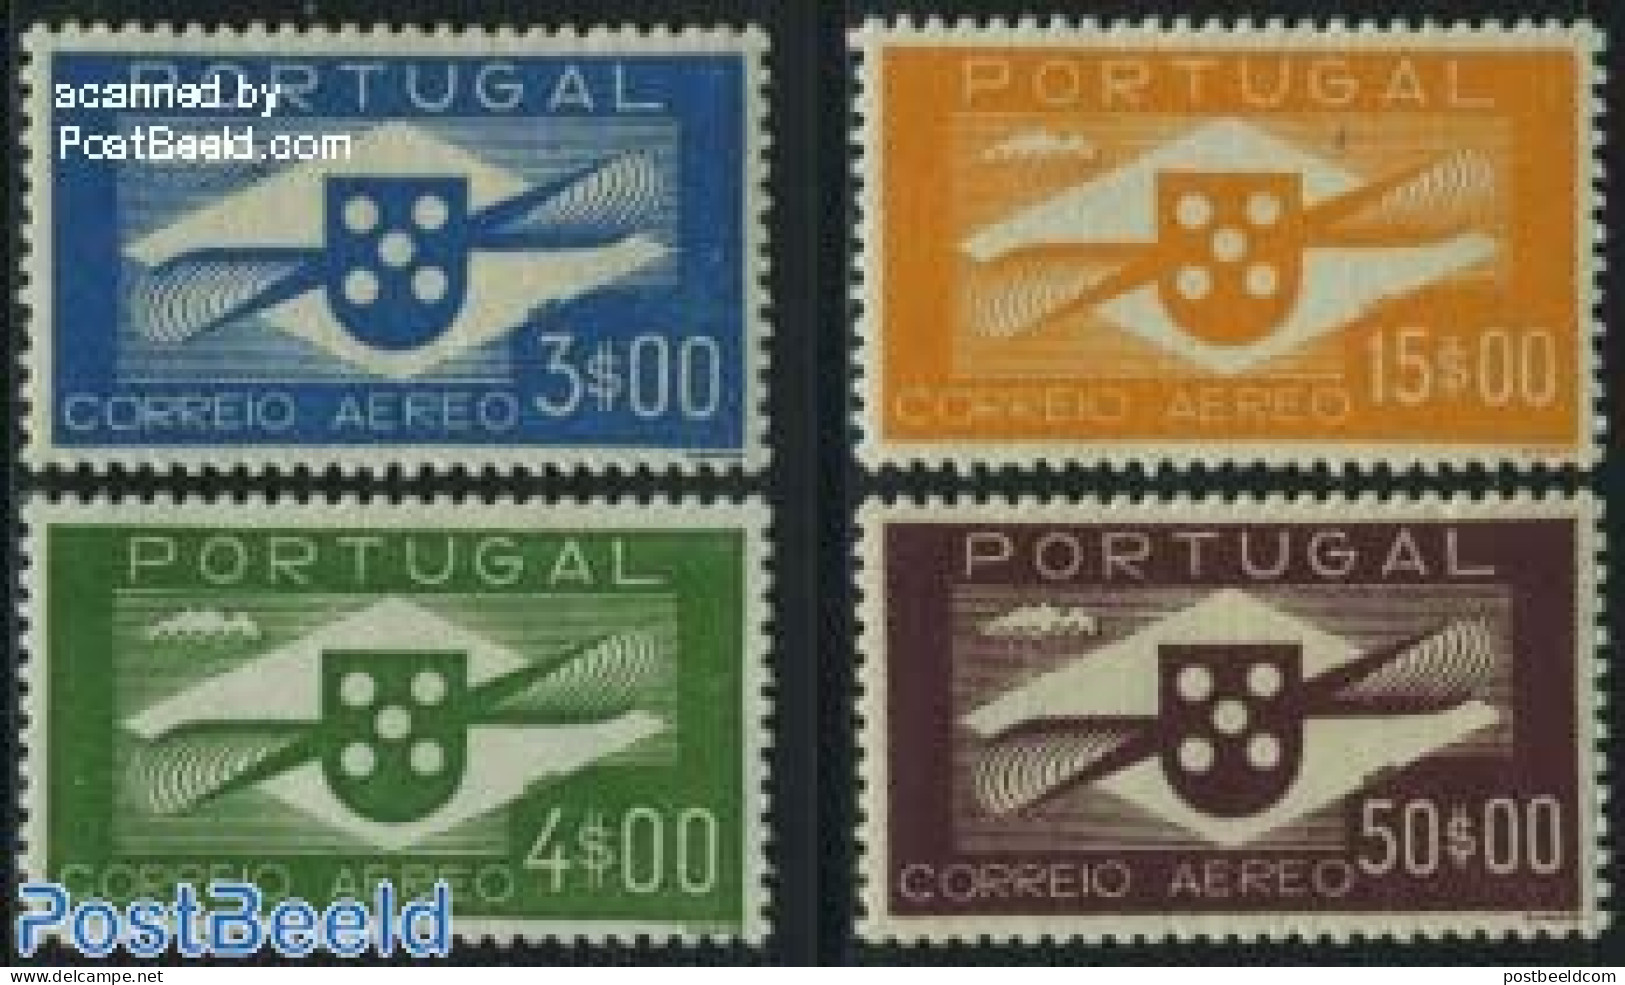 Portugal 1941 Airmail Definitives 4v, Unused (hinged) - Ongebruikt